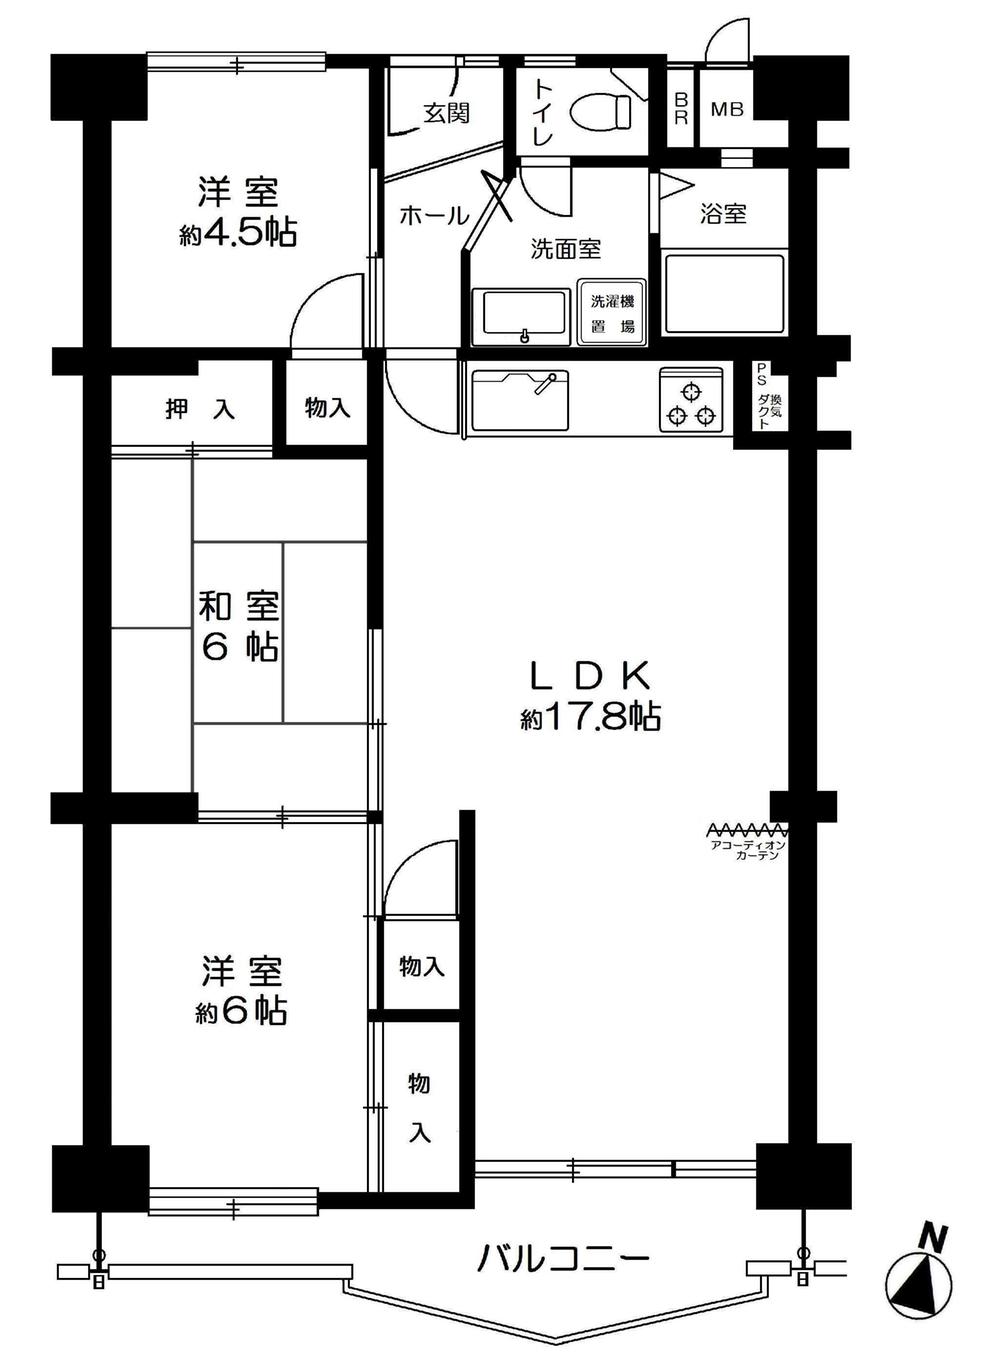 Floor plan. 3LDK, Price 19.9 million yen, Occupied area 71.27 sq m , Balcony area 6.97 sq m